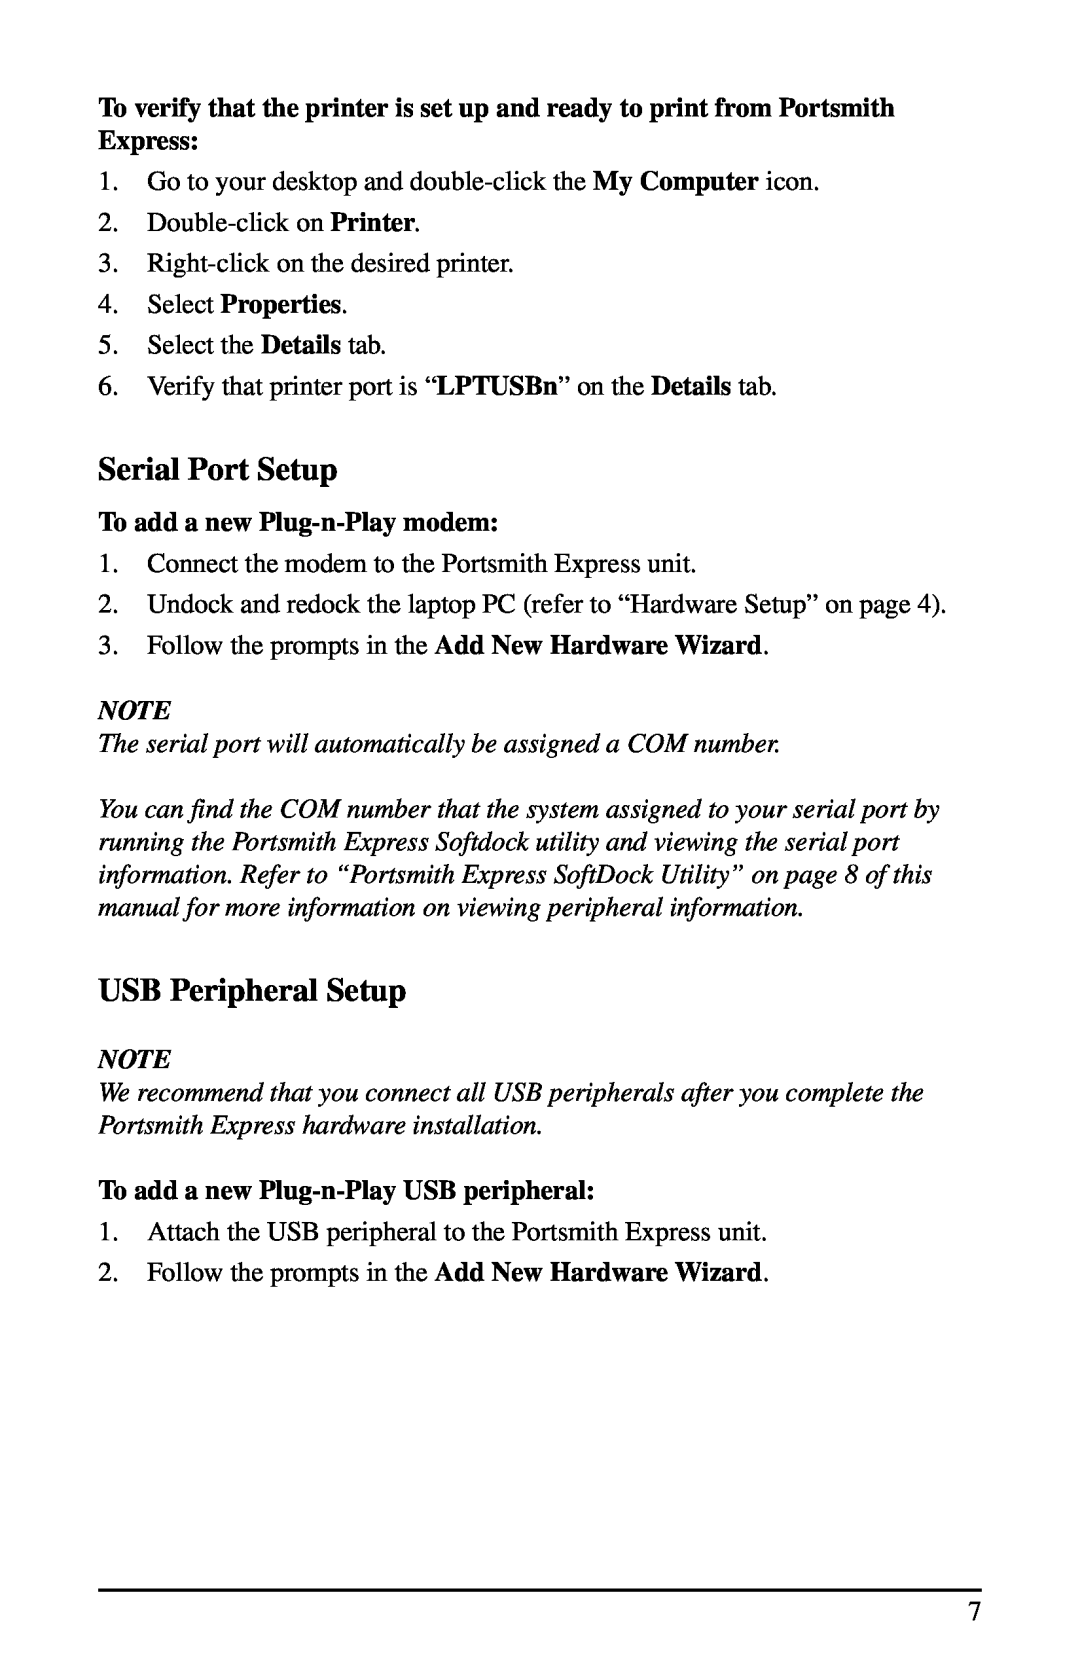 Portsmith user manual Serial Port Setup, USB Peripheral Setup, Select Properties, To add a new Plug-n-Play modem 